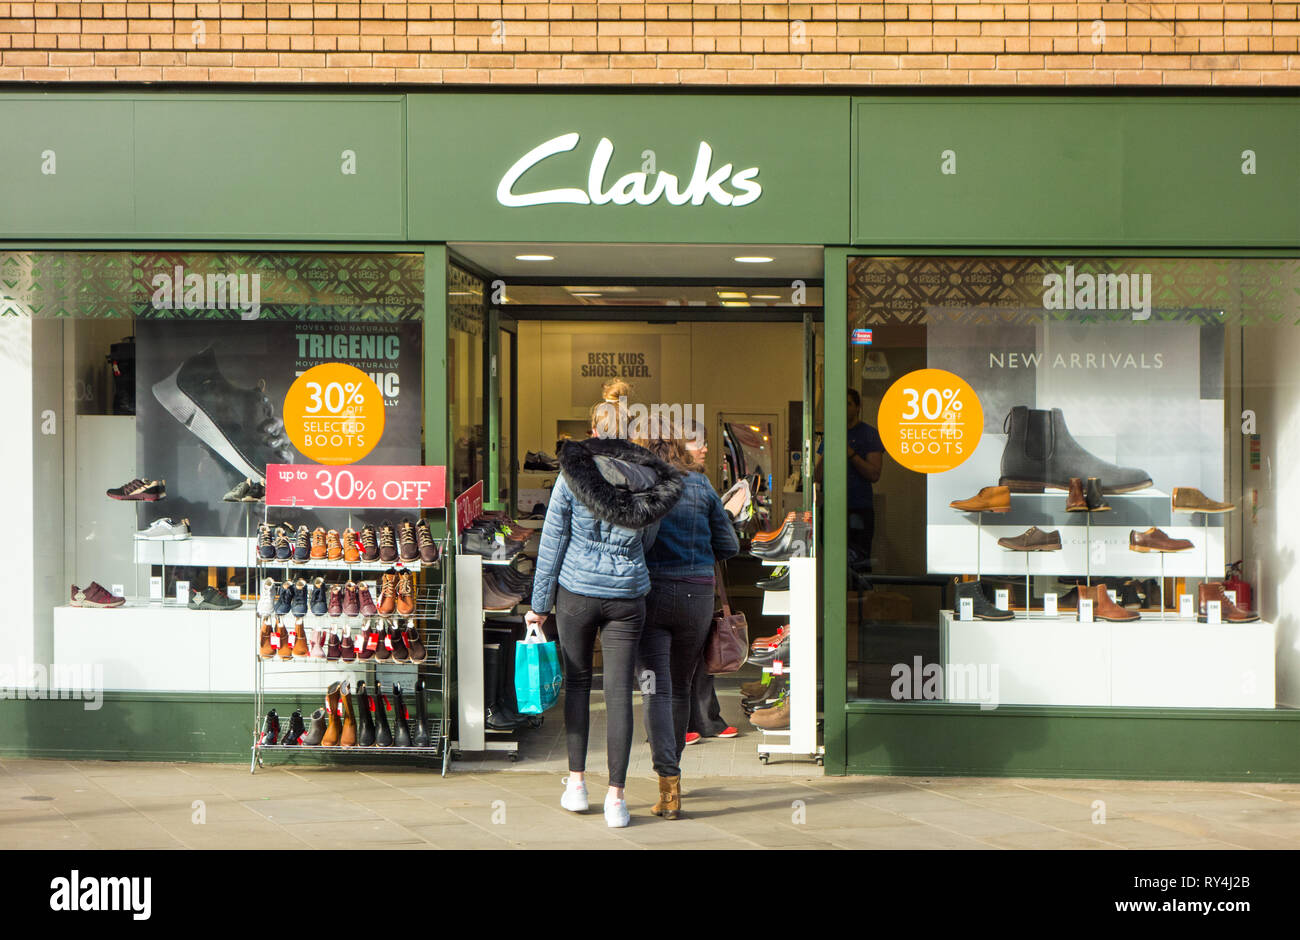 clarks shoe shop plymouth